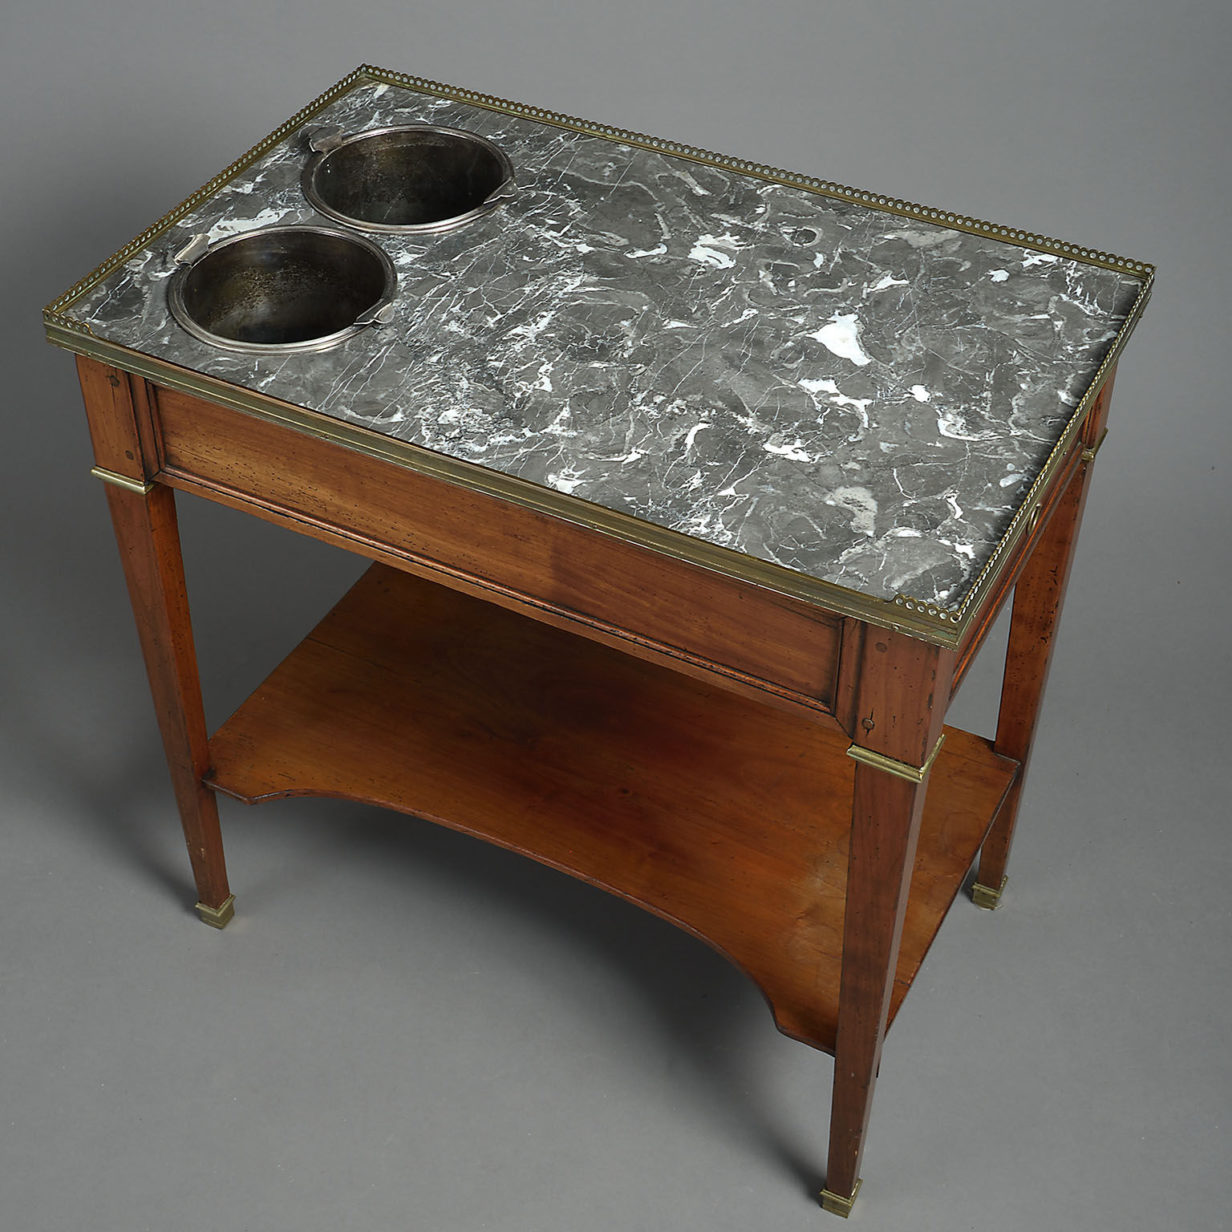 French 20th century fruitwood raffraichissoir or champagne table